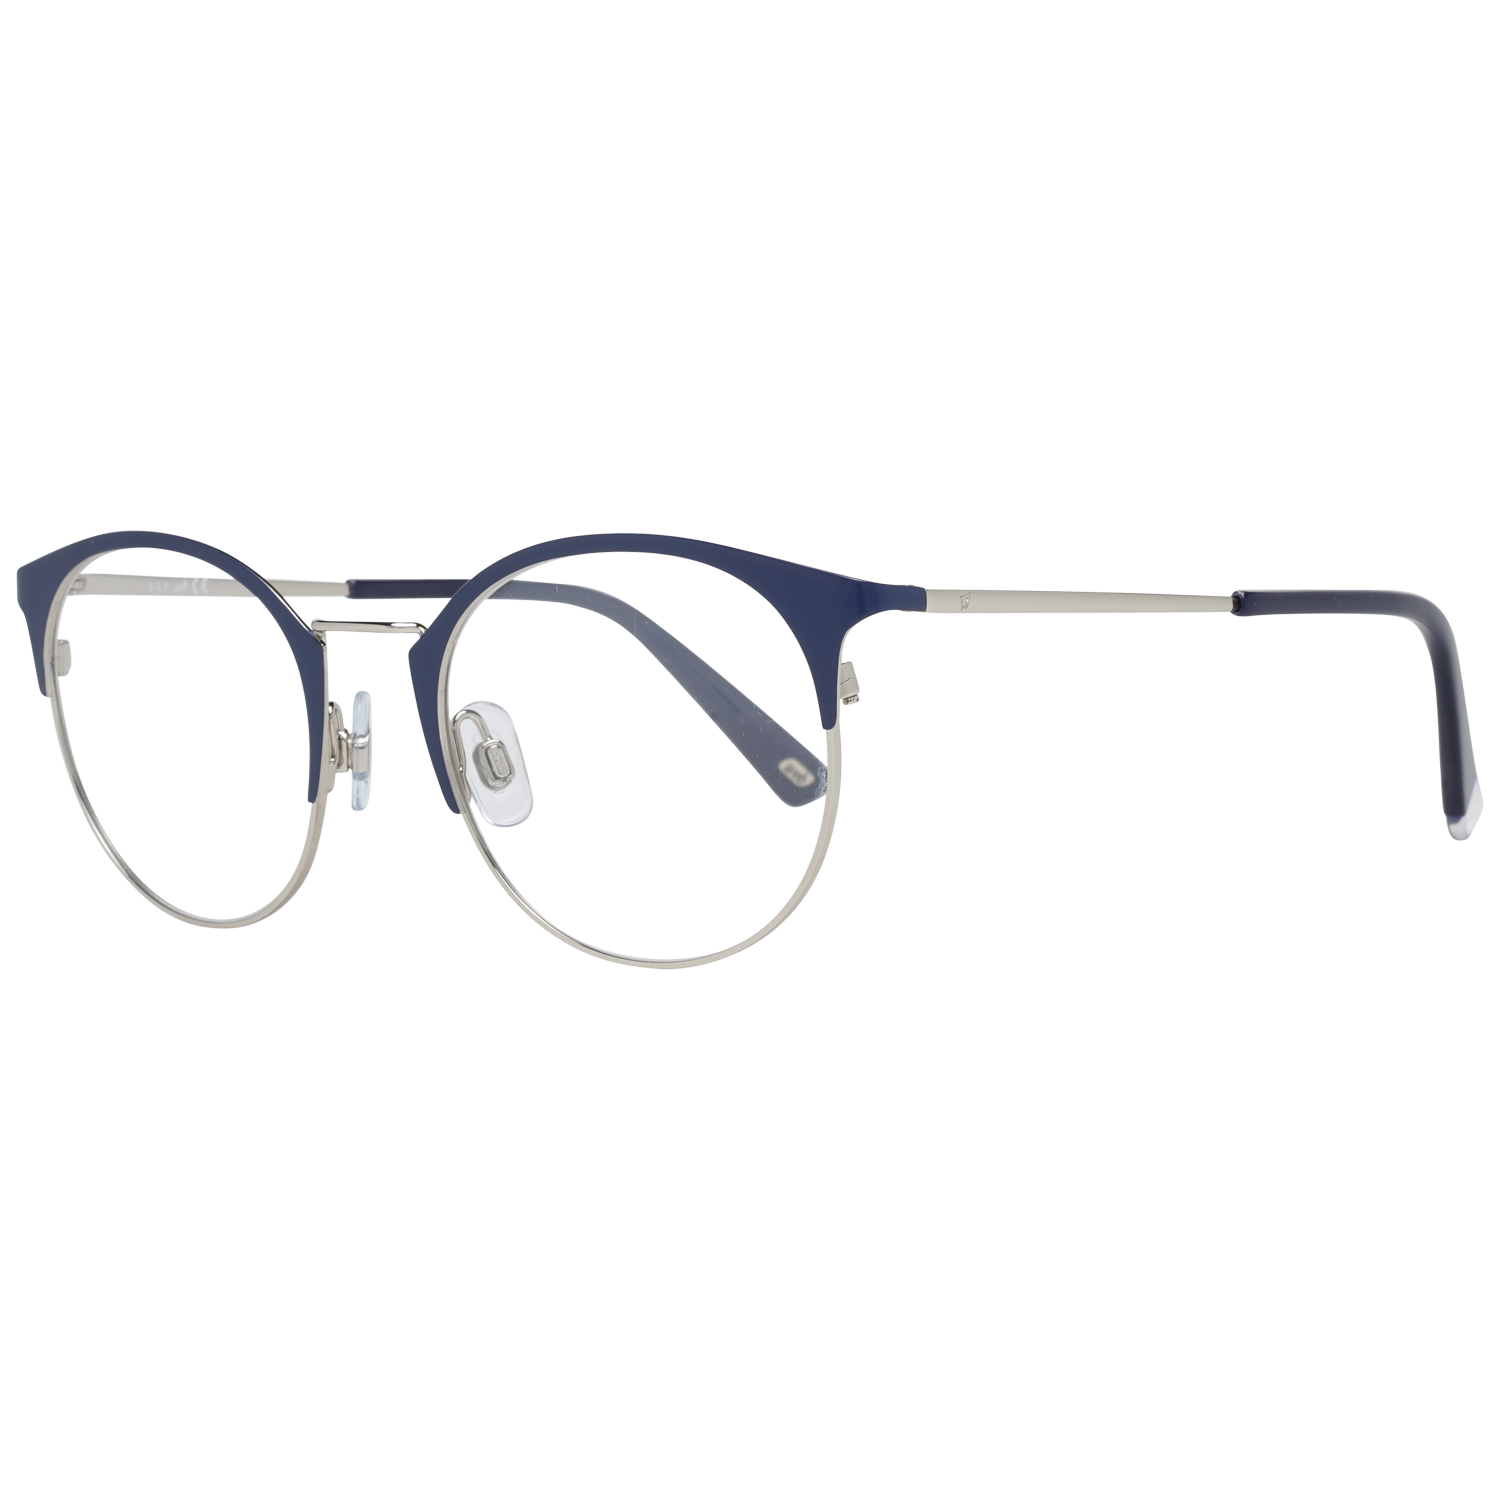 Web Frames Web Prescription Glasses Optical Frame WE5303 016 50 Eyeglasses Eyewear UK USA Australia 